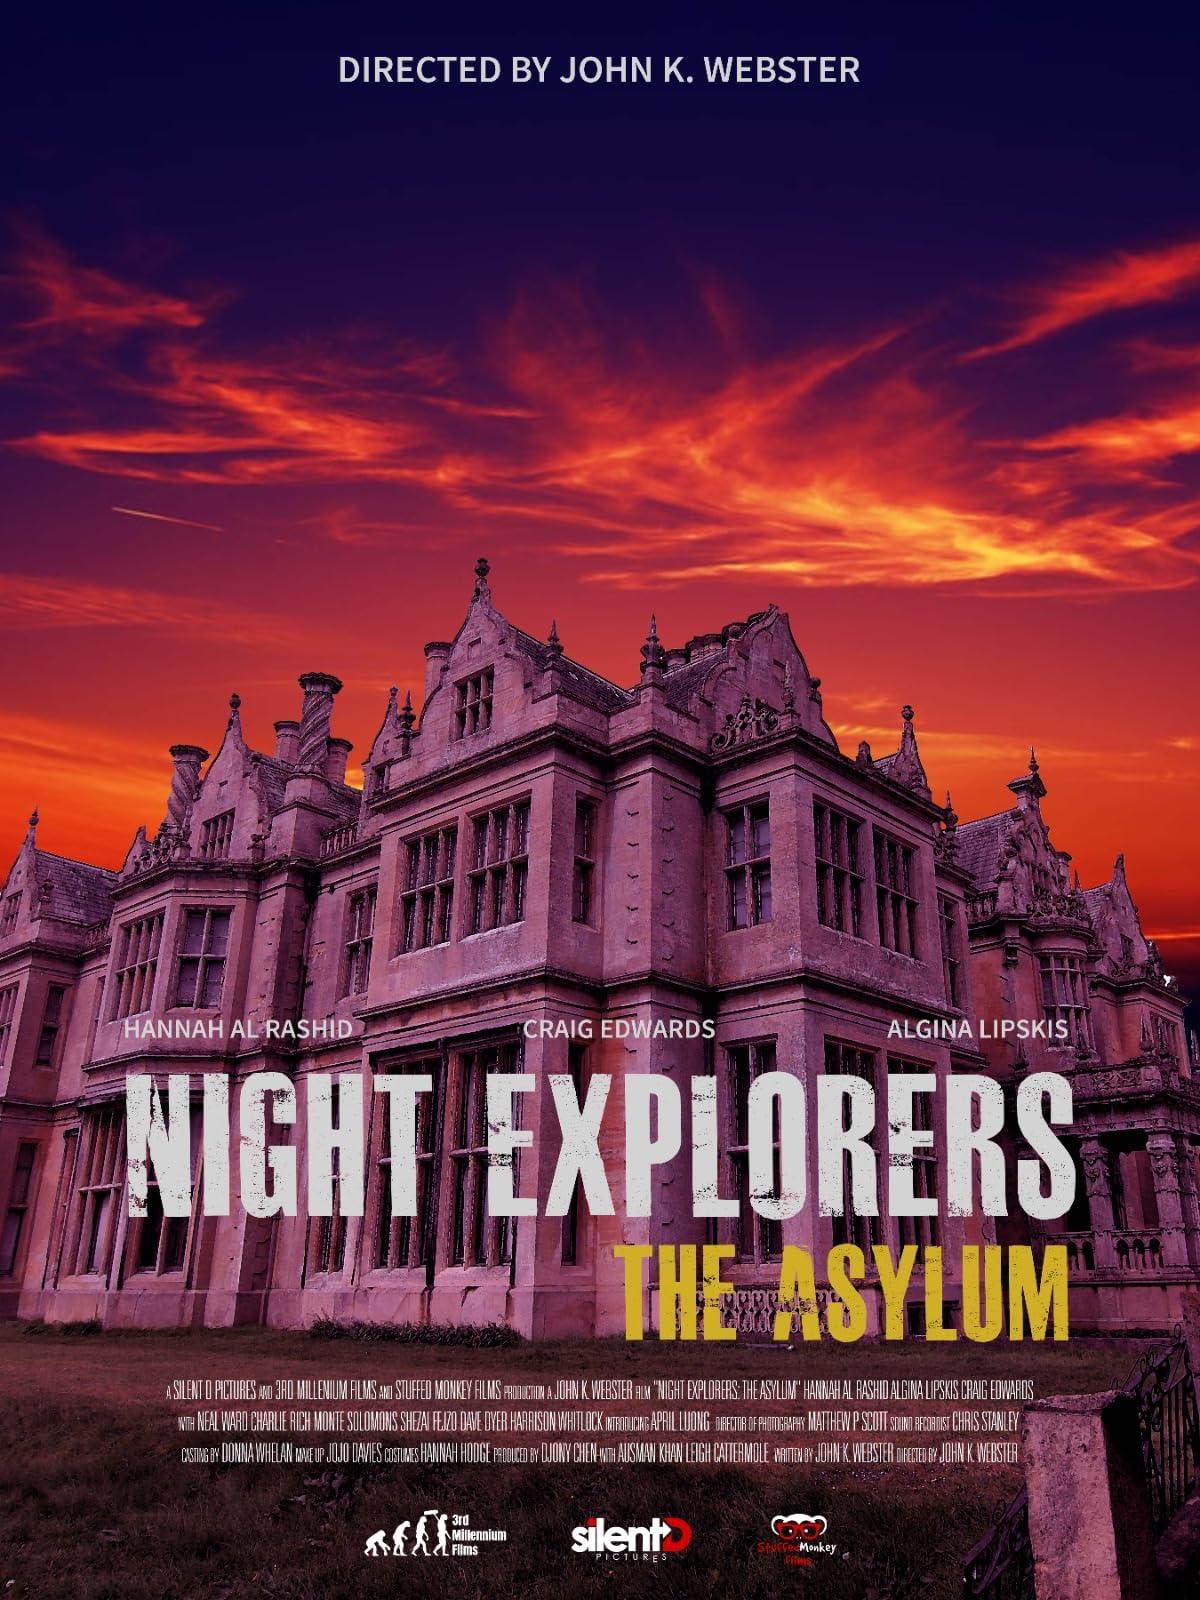 Постер фильма Night Explorers: The Asylum